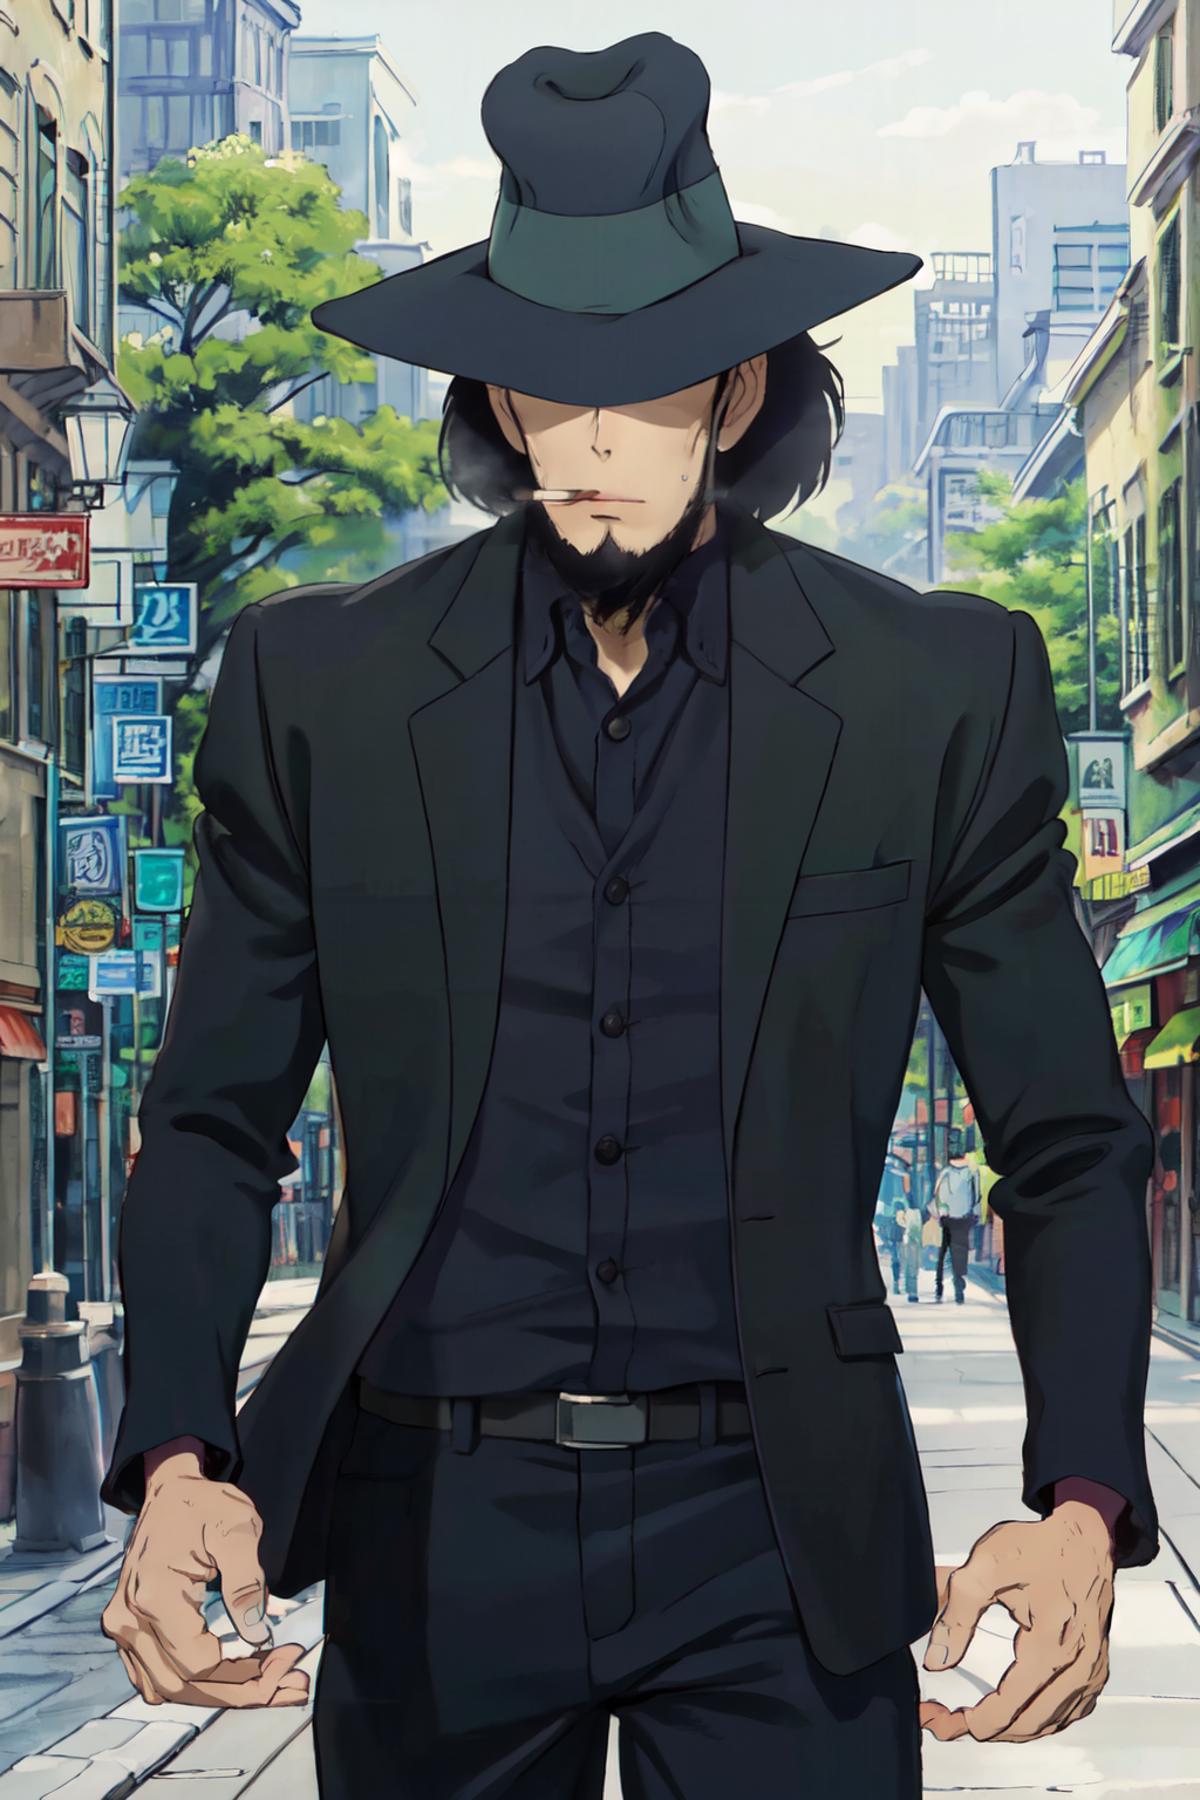 Daisuke Jigen - Lupin III image by kokurine